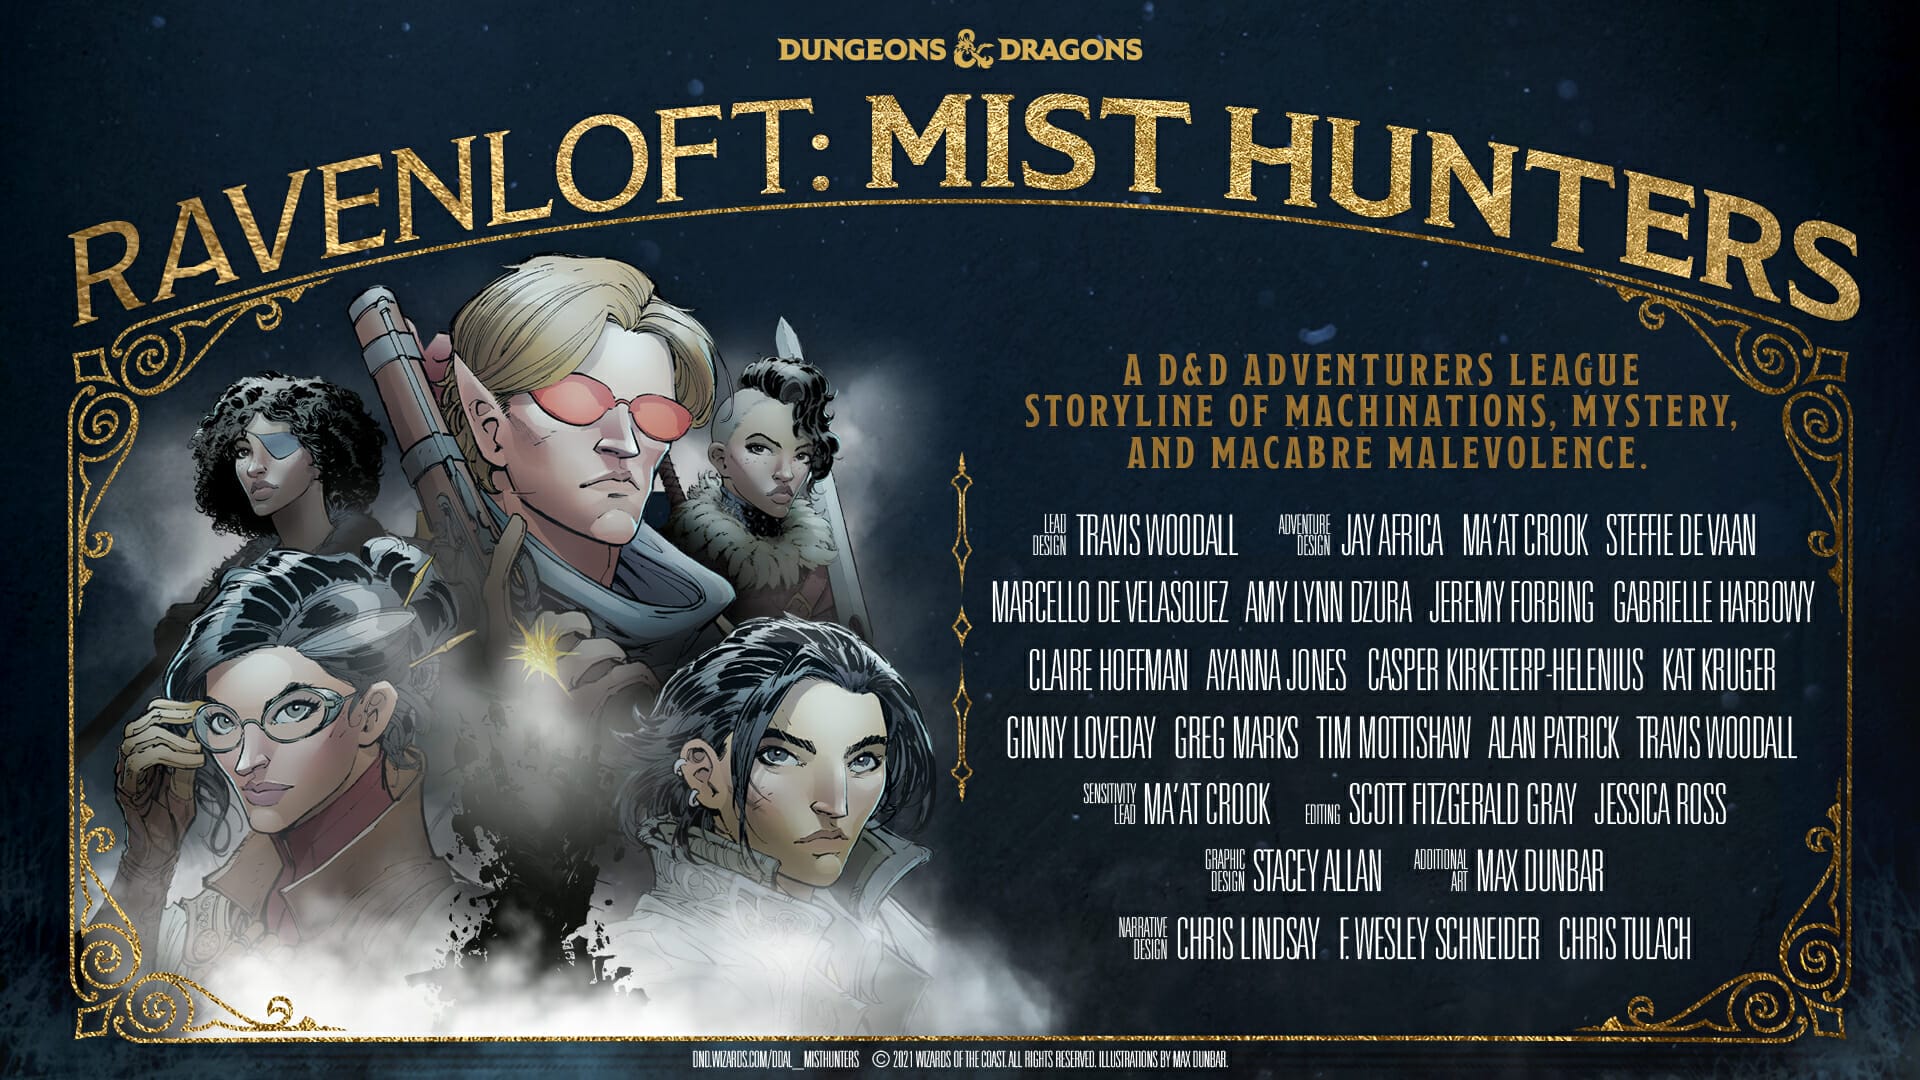 Ravenloft: Mist Hunters